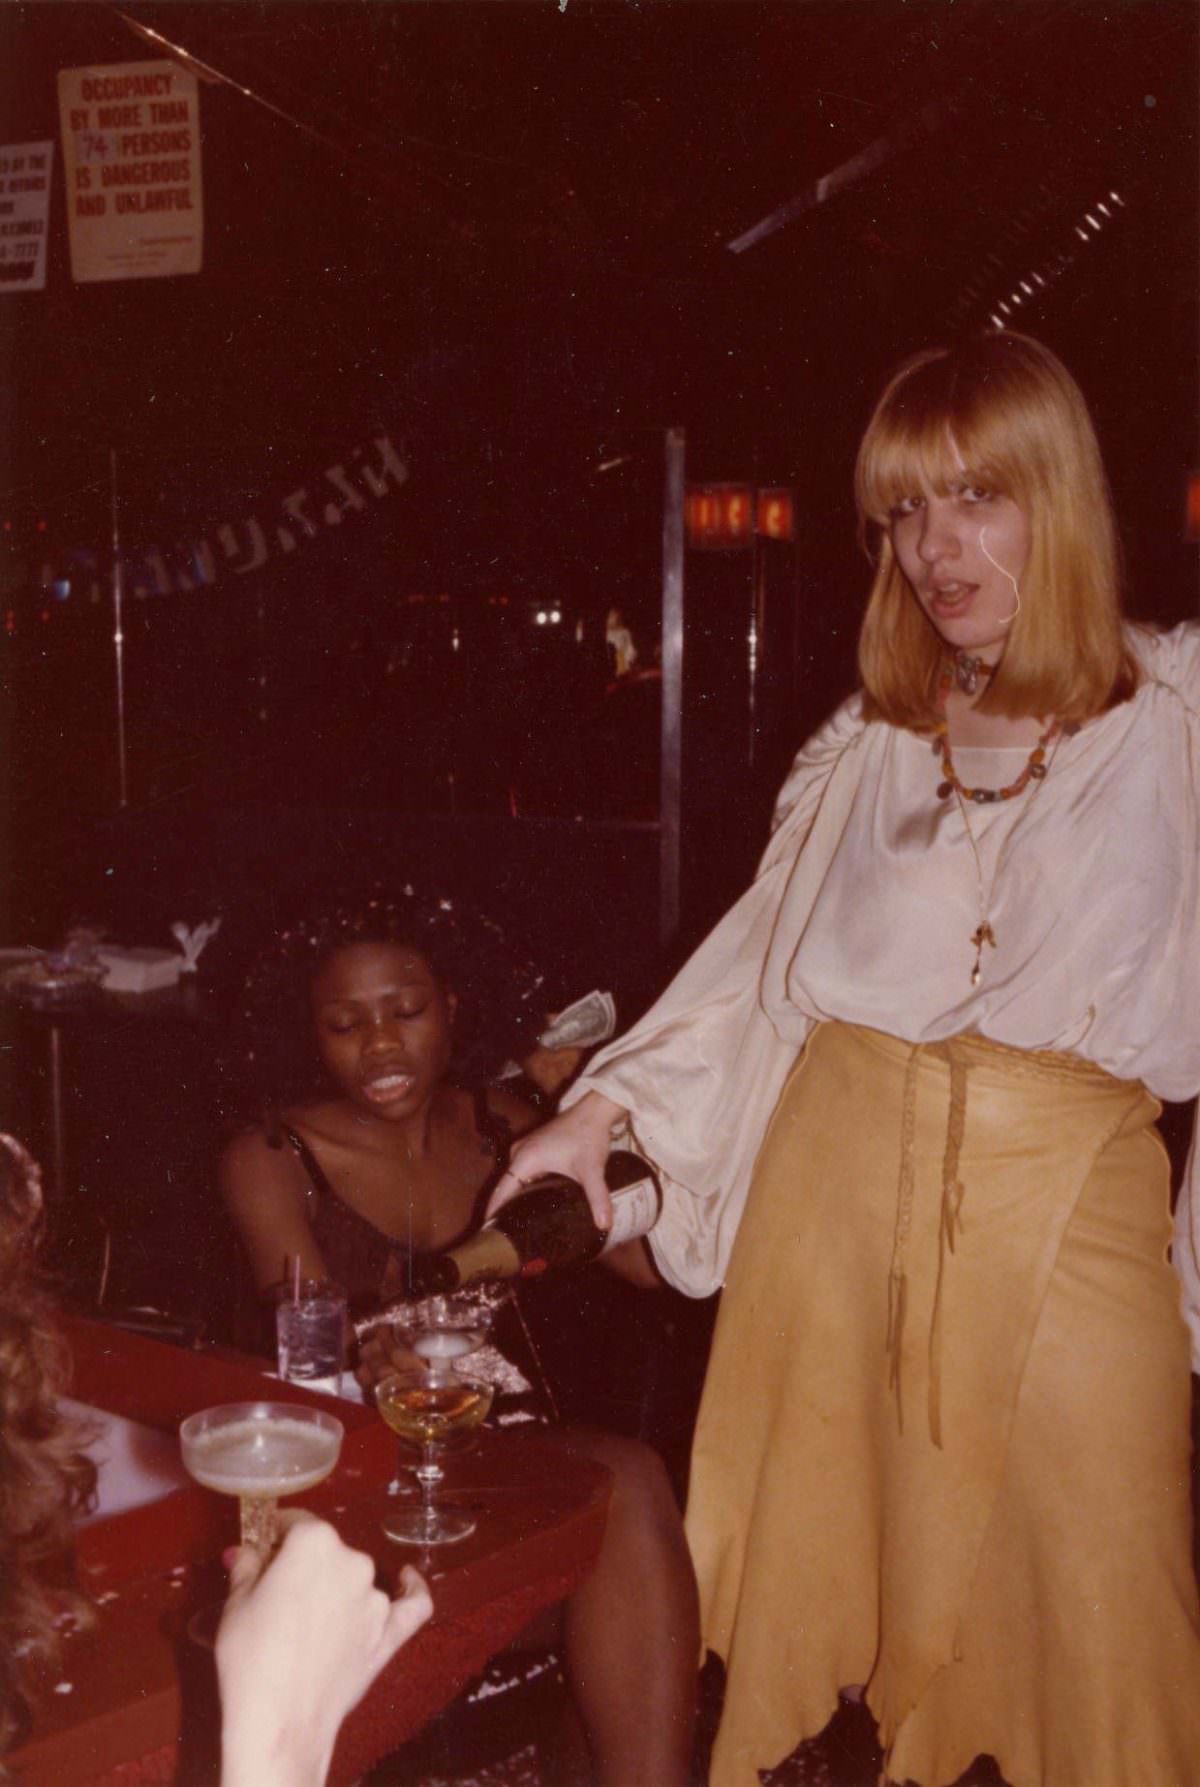 A Peek Behind the Curtain: NYC's Go-Go Bars in the 70s through the Lens of Meryl Meisler